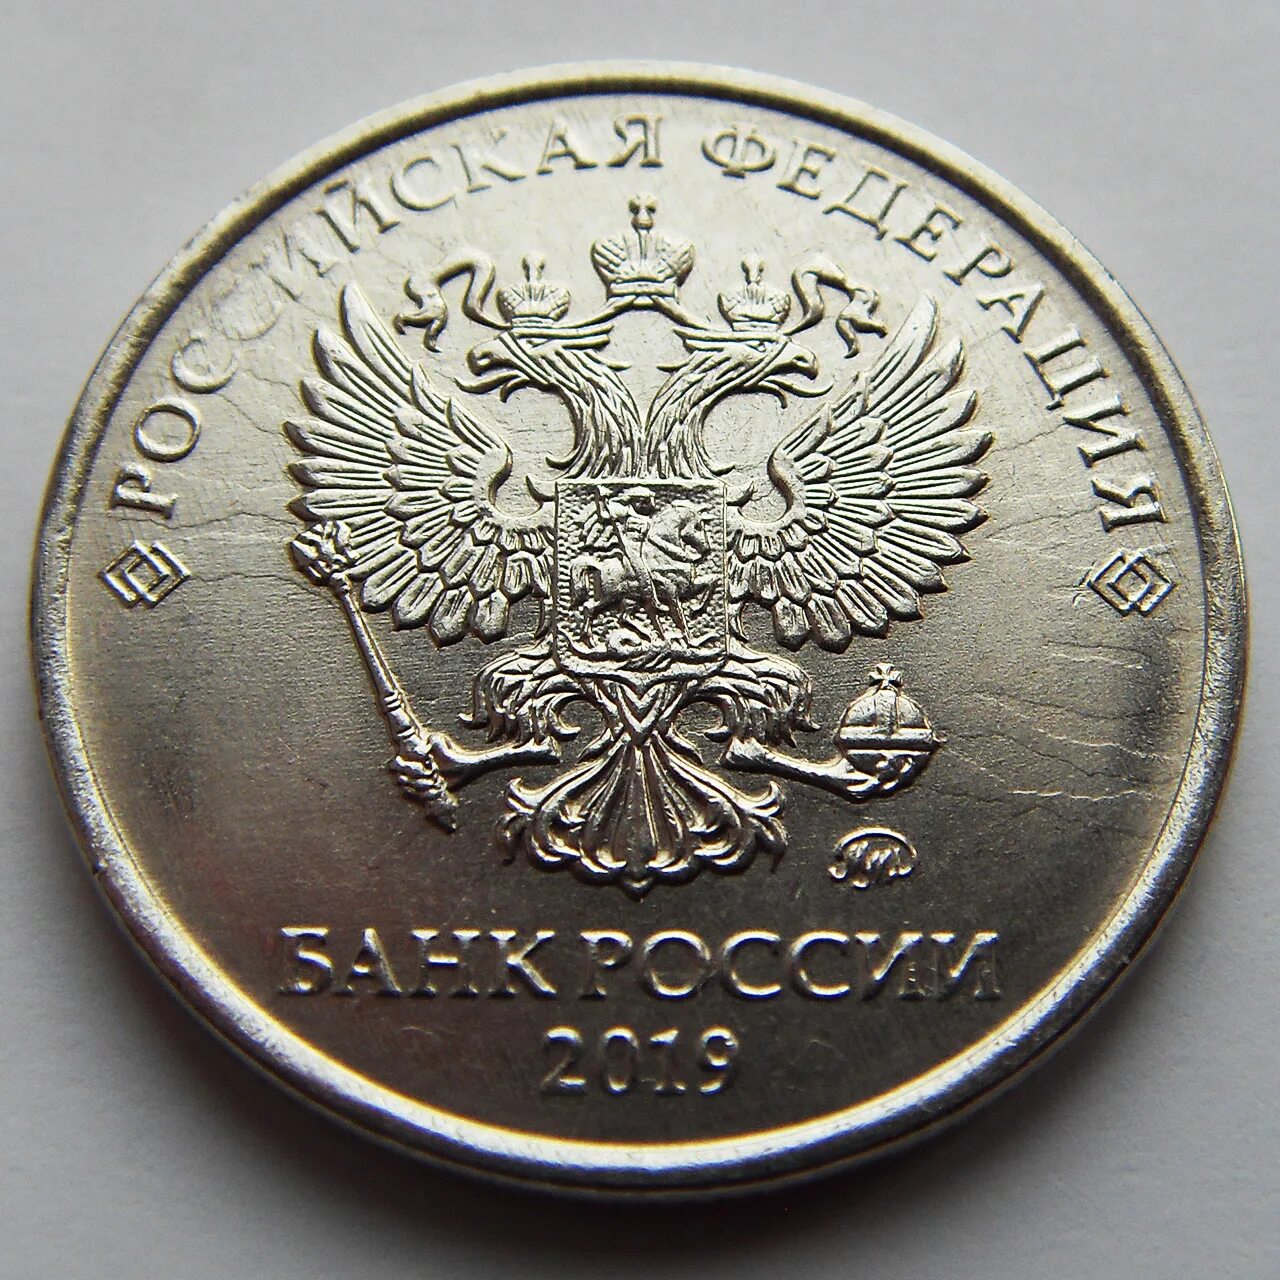 5 руб 2019 г. Монета 25 рублей. Монета 2 рубля 2019. Рублей монета 2019 года. Двадцать пять рублей.